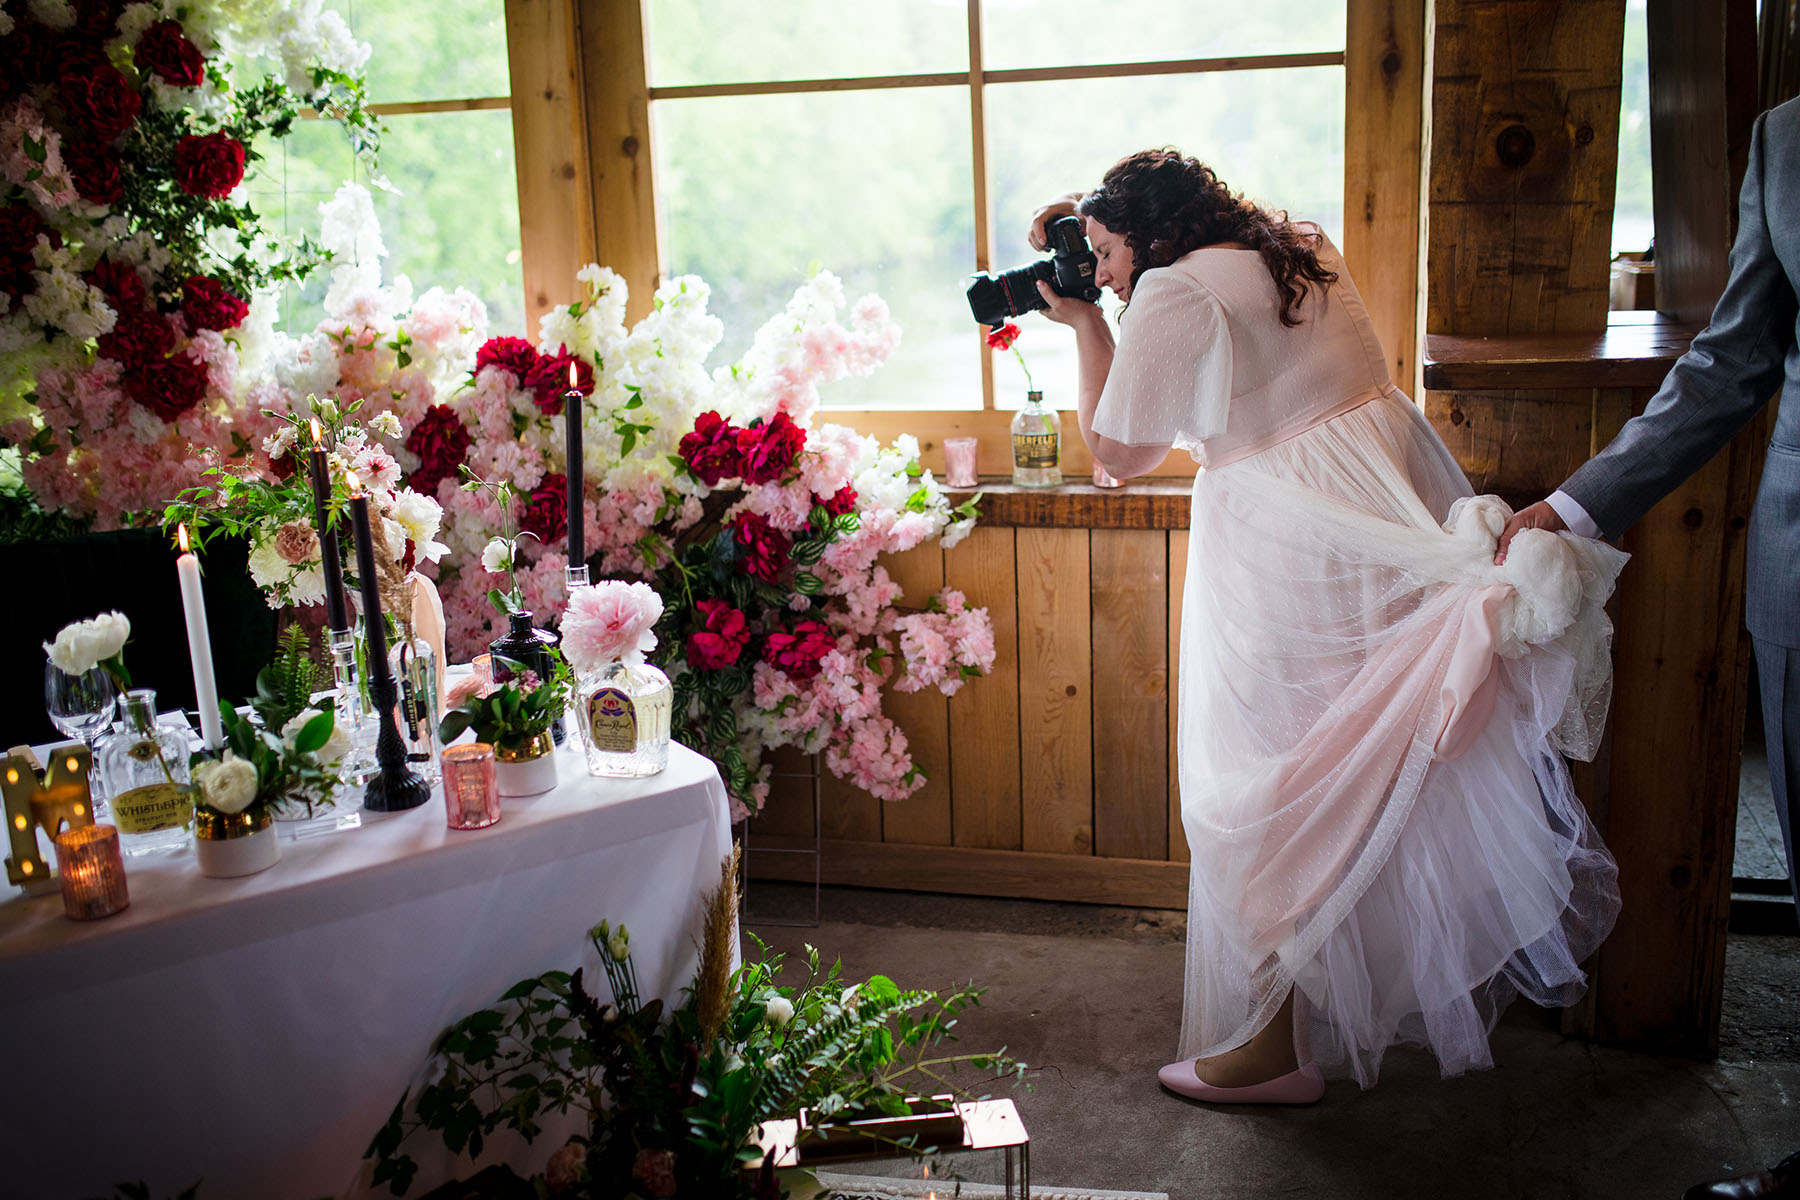 Studio Baron Photo owner photogrpahs her own wedding